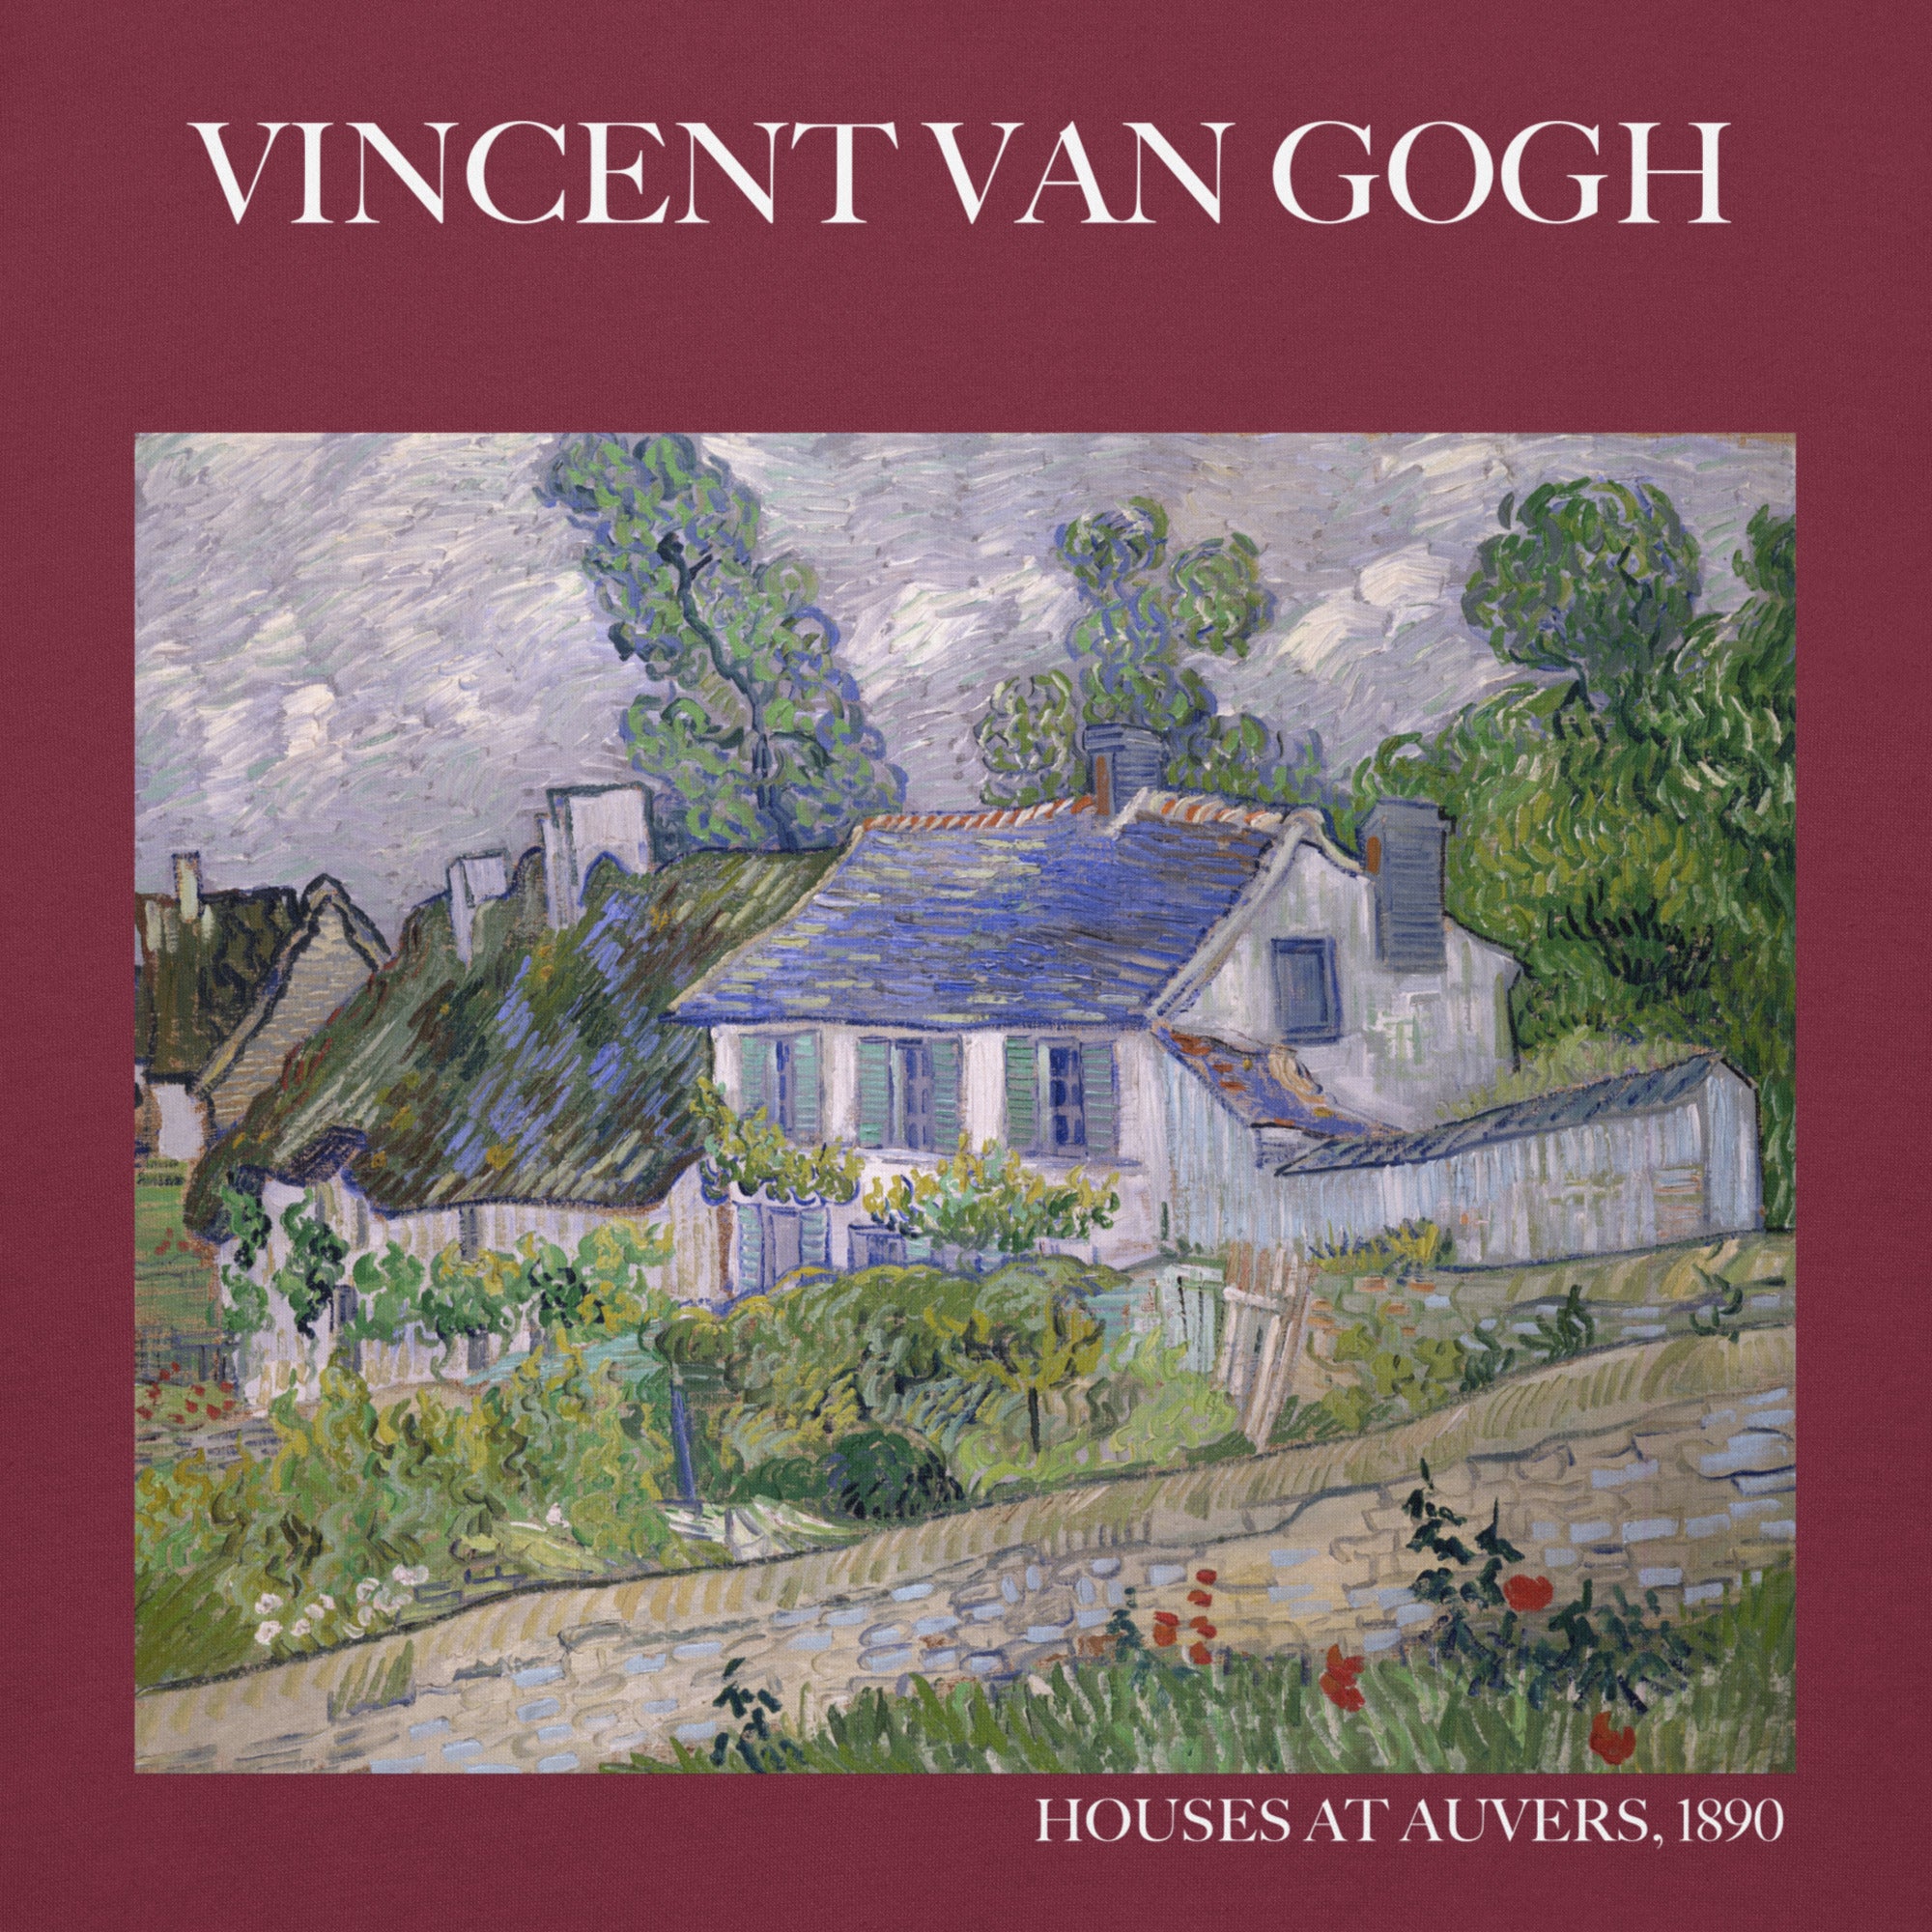 Vincent van Gogh 'Houses at Auvers' Famous Painting Hoodie | Unisex Premium Art Hoodie